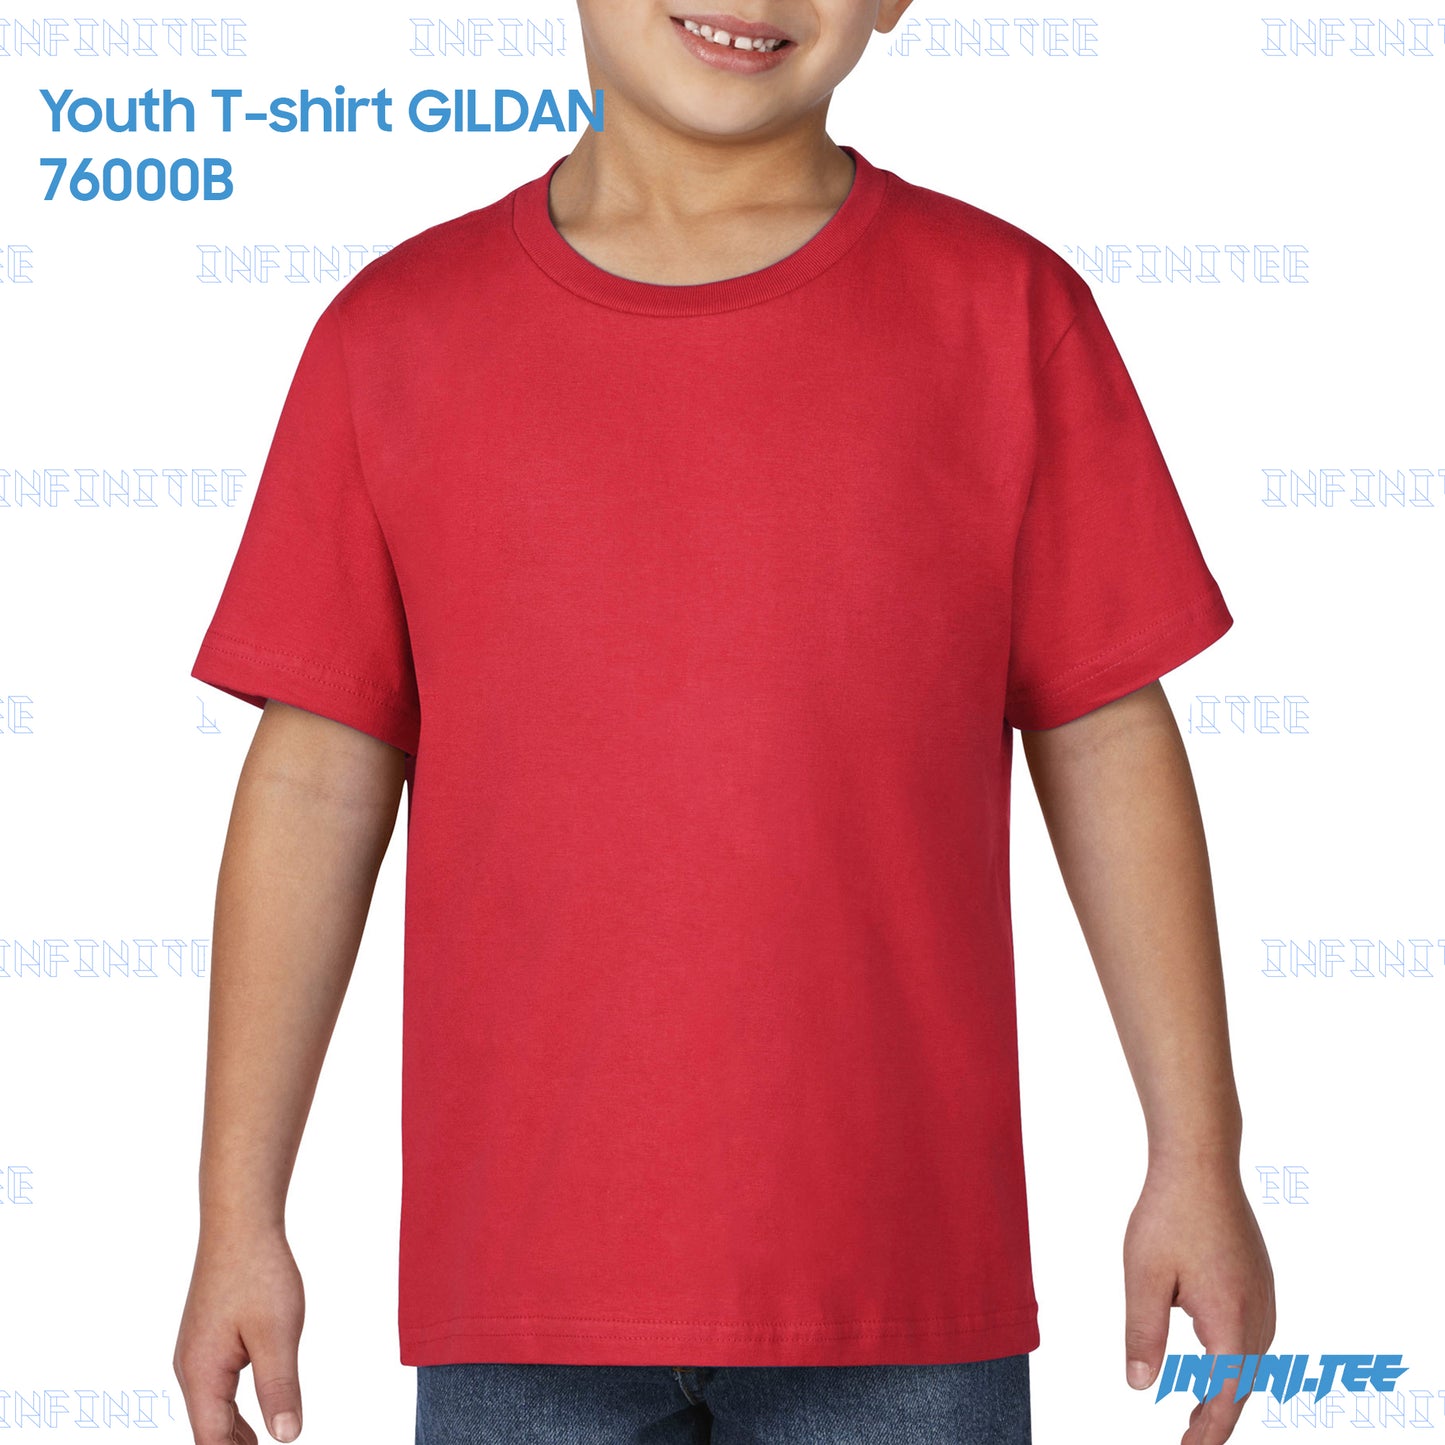 Youth T-shirt 76000B GILDAN - RED